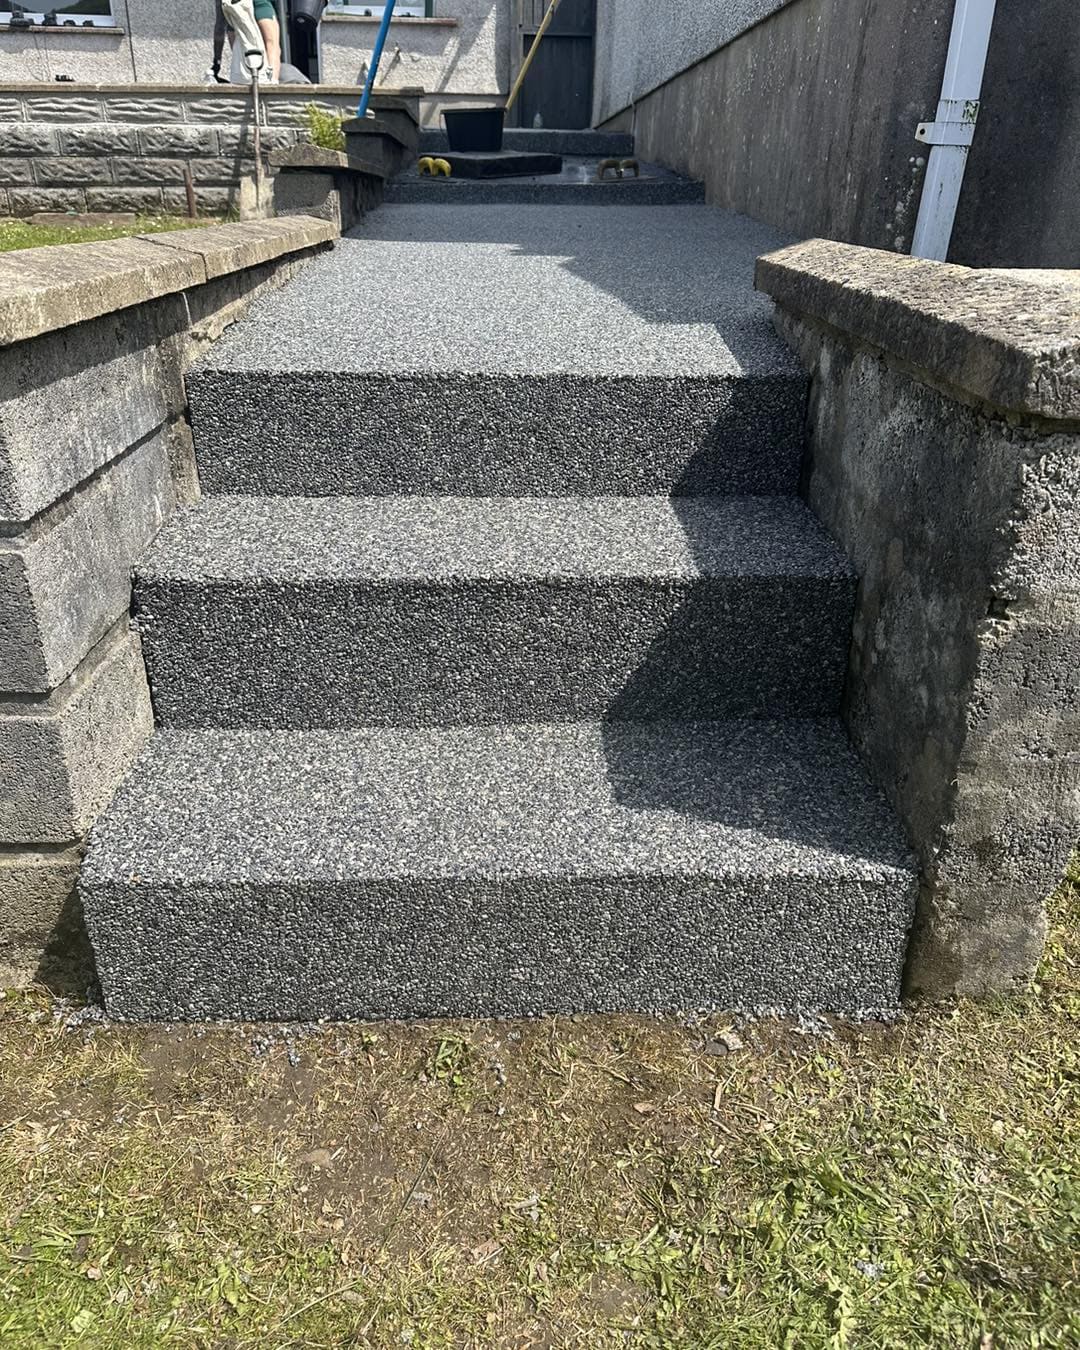 Completed resin bound steps installed in Rhyd-y-fro in Pontardawe